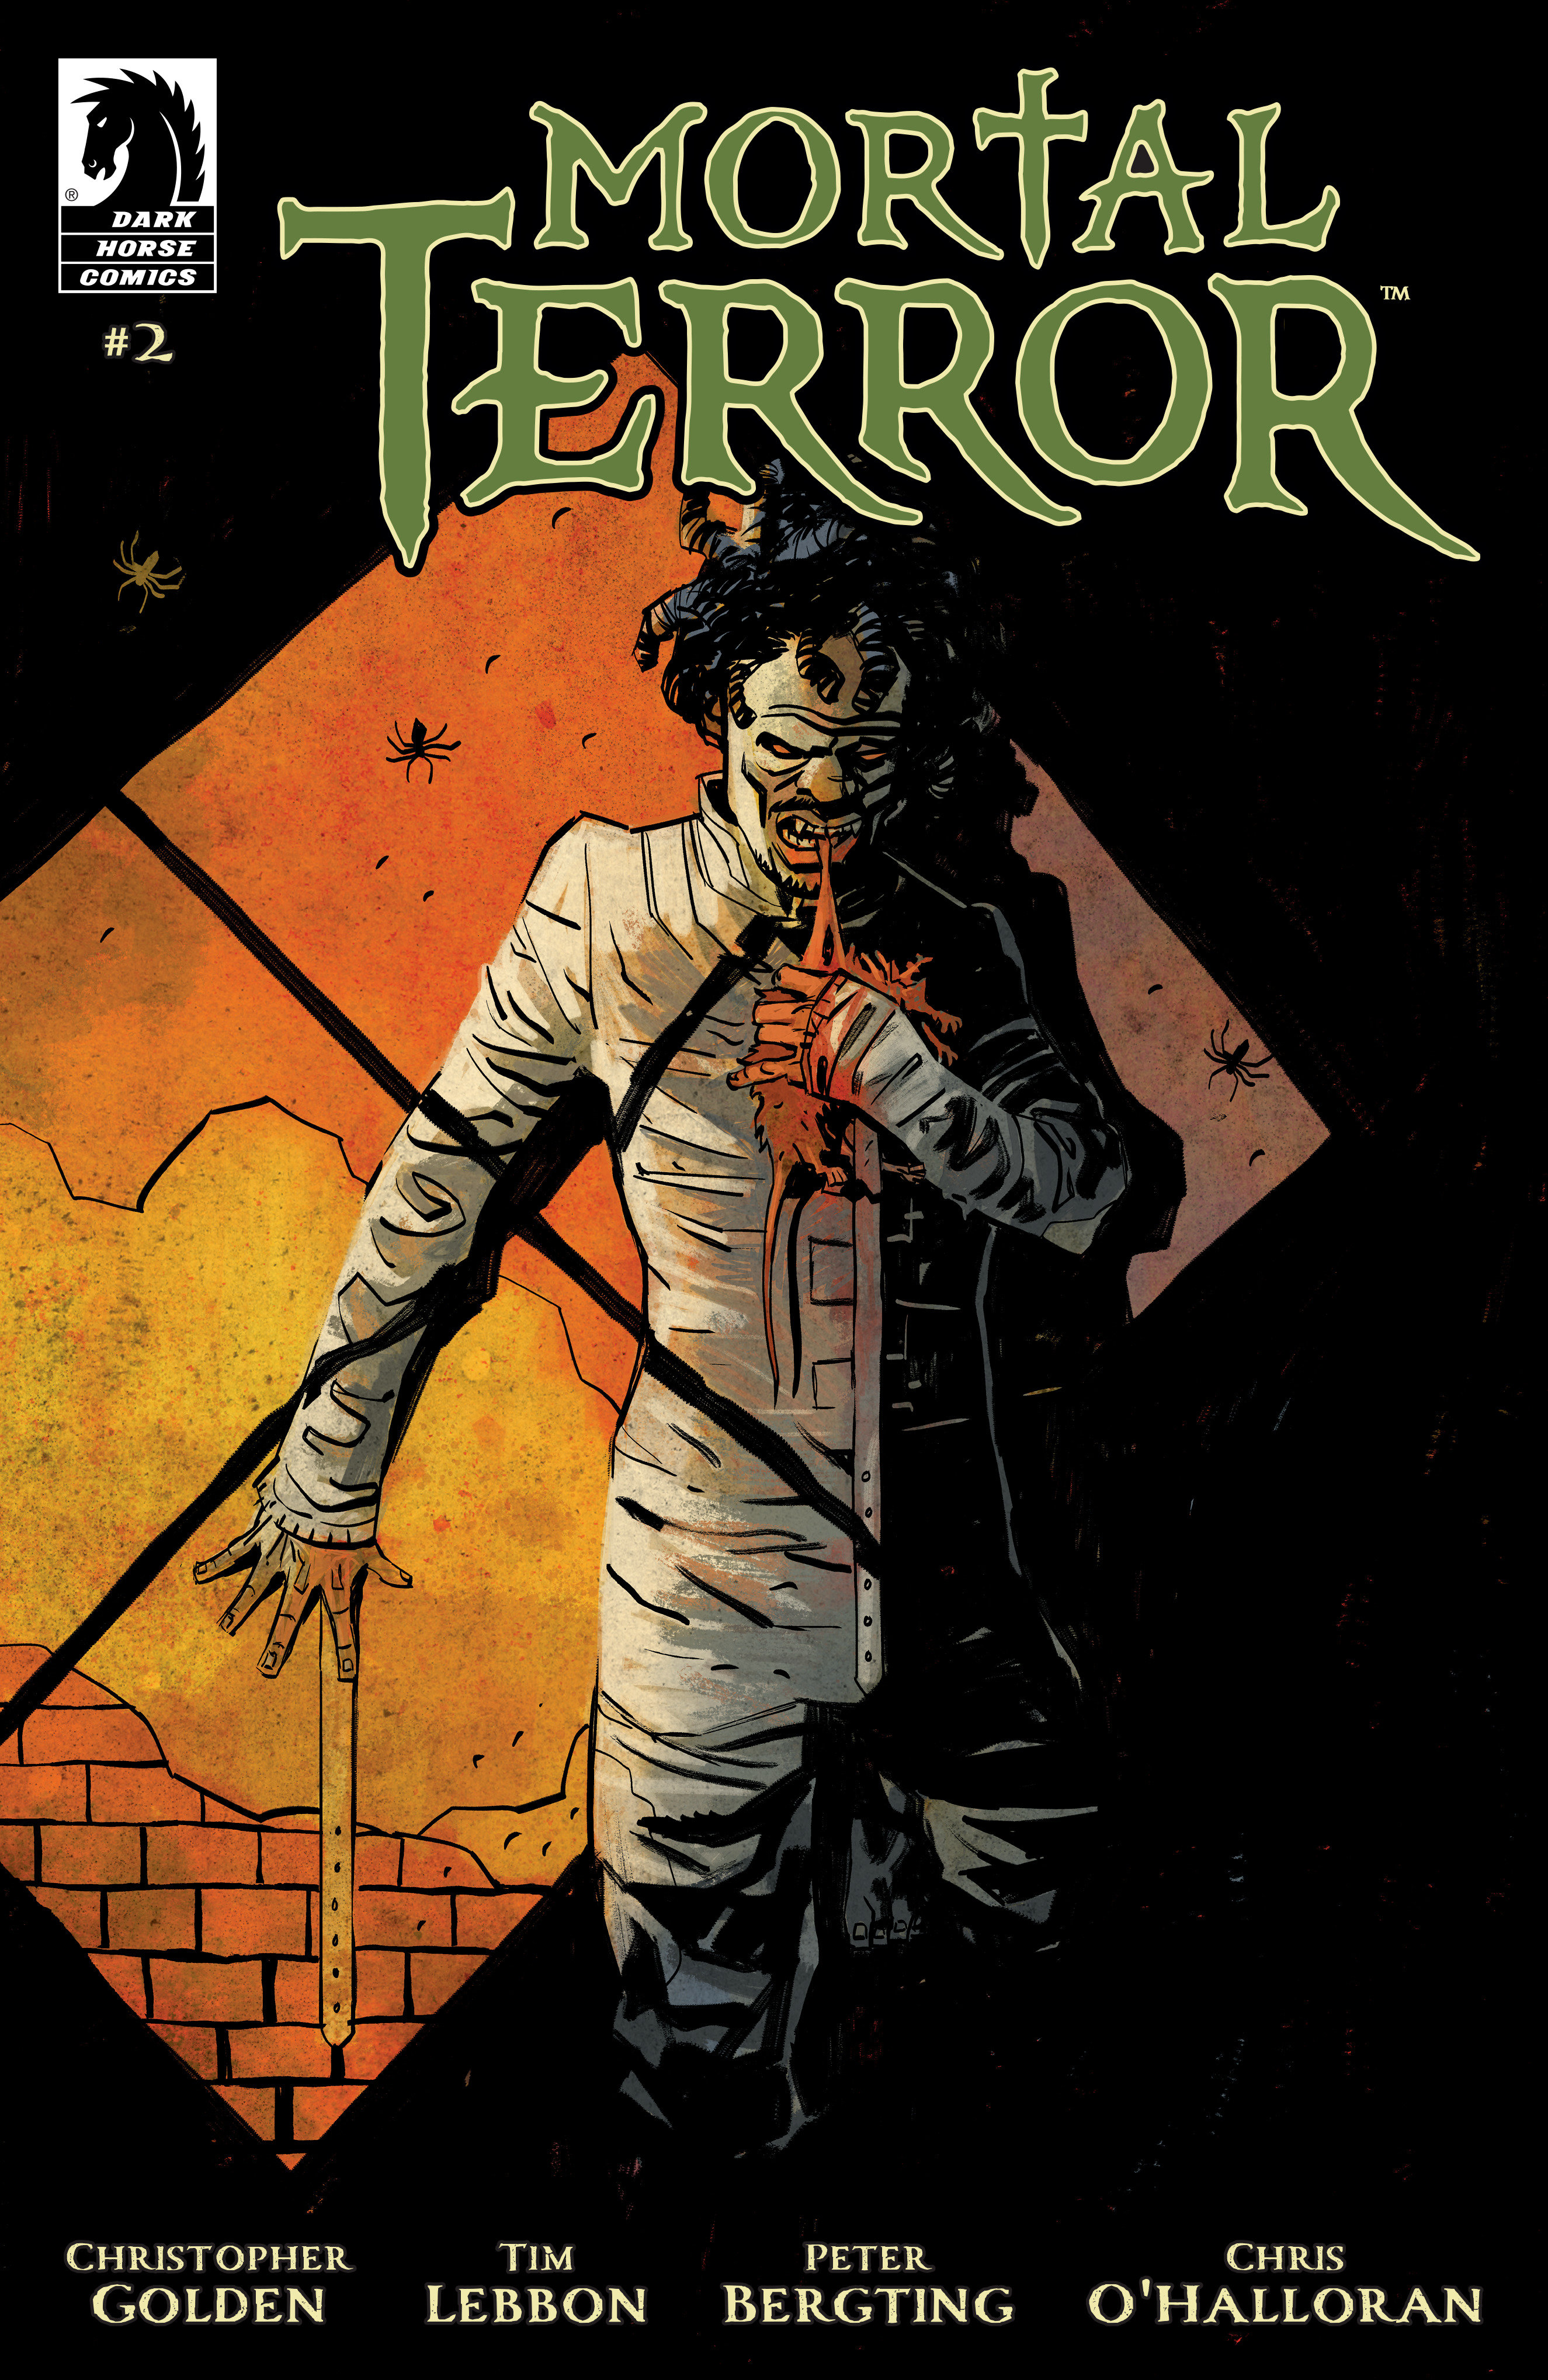 Mortal Terror #2 Cover A (Peter Bergting)